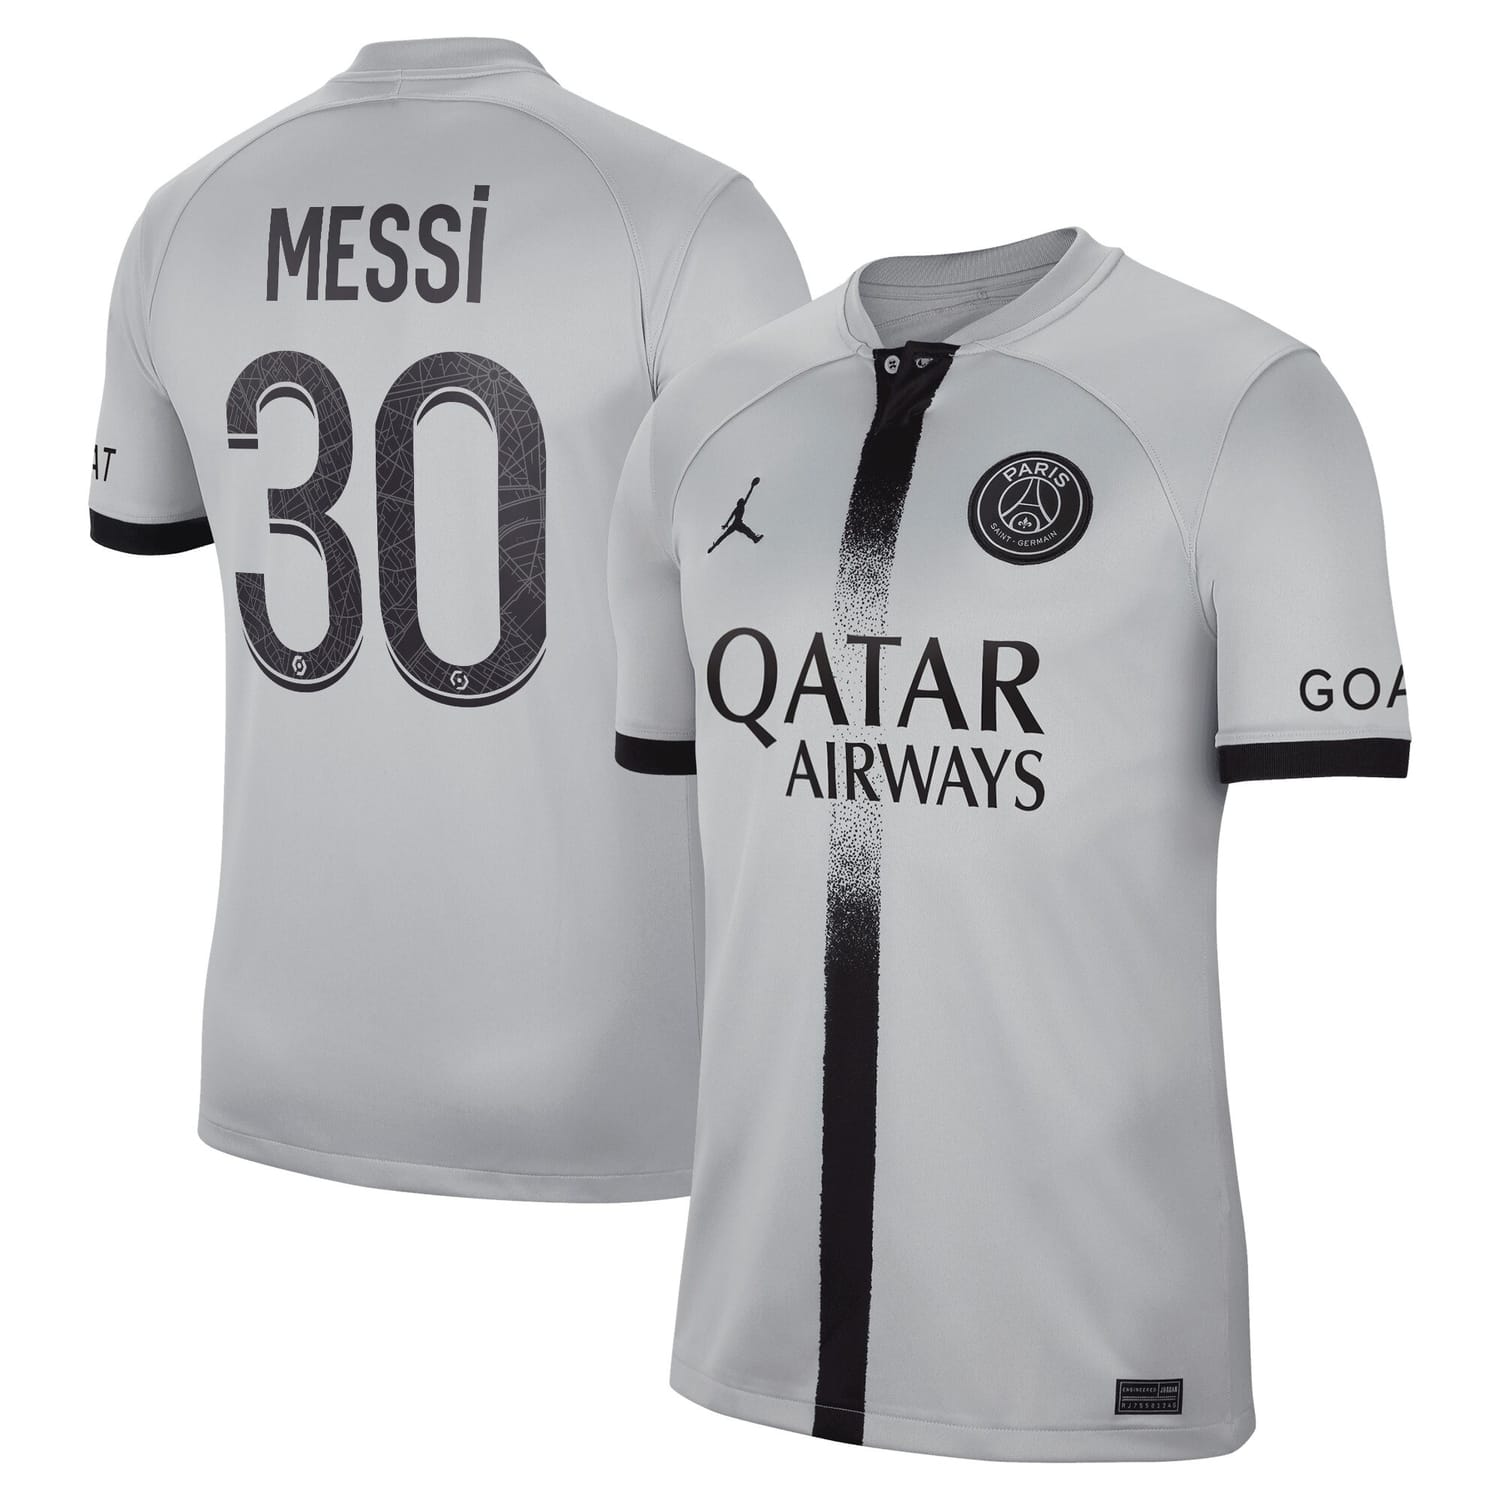 Ligue 1 Paris Saint-Germain Away Jersey Shirt 2022-23 player Lionel Messi 30 printing for Men